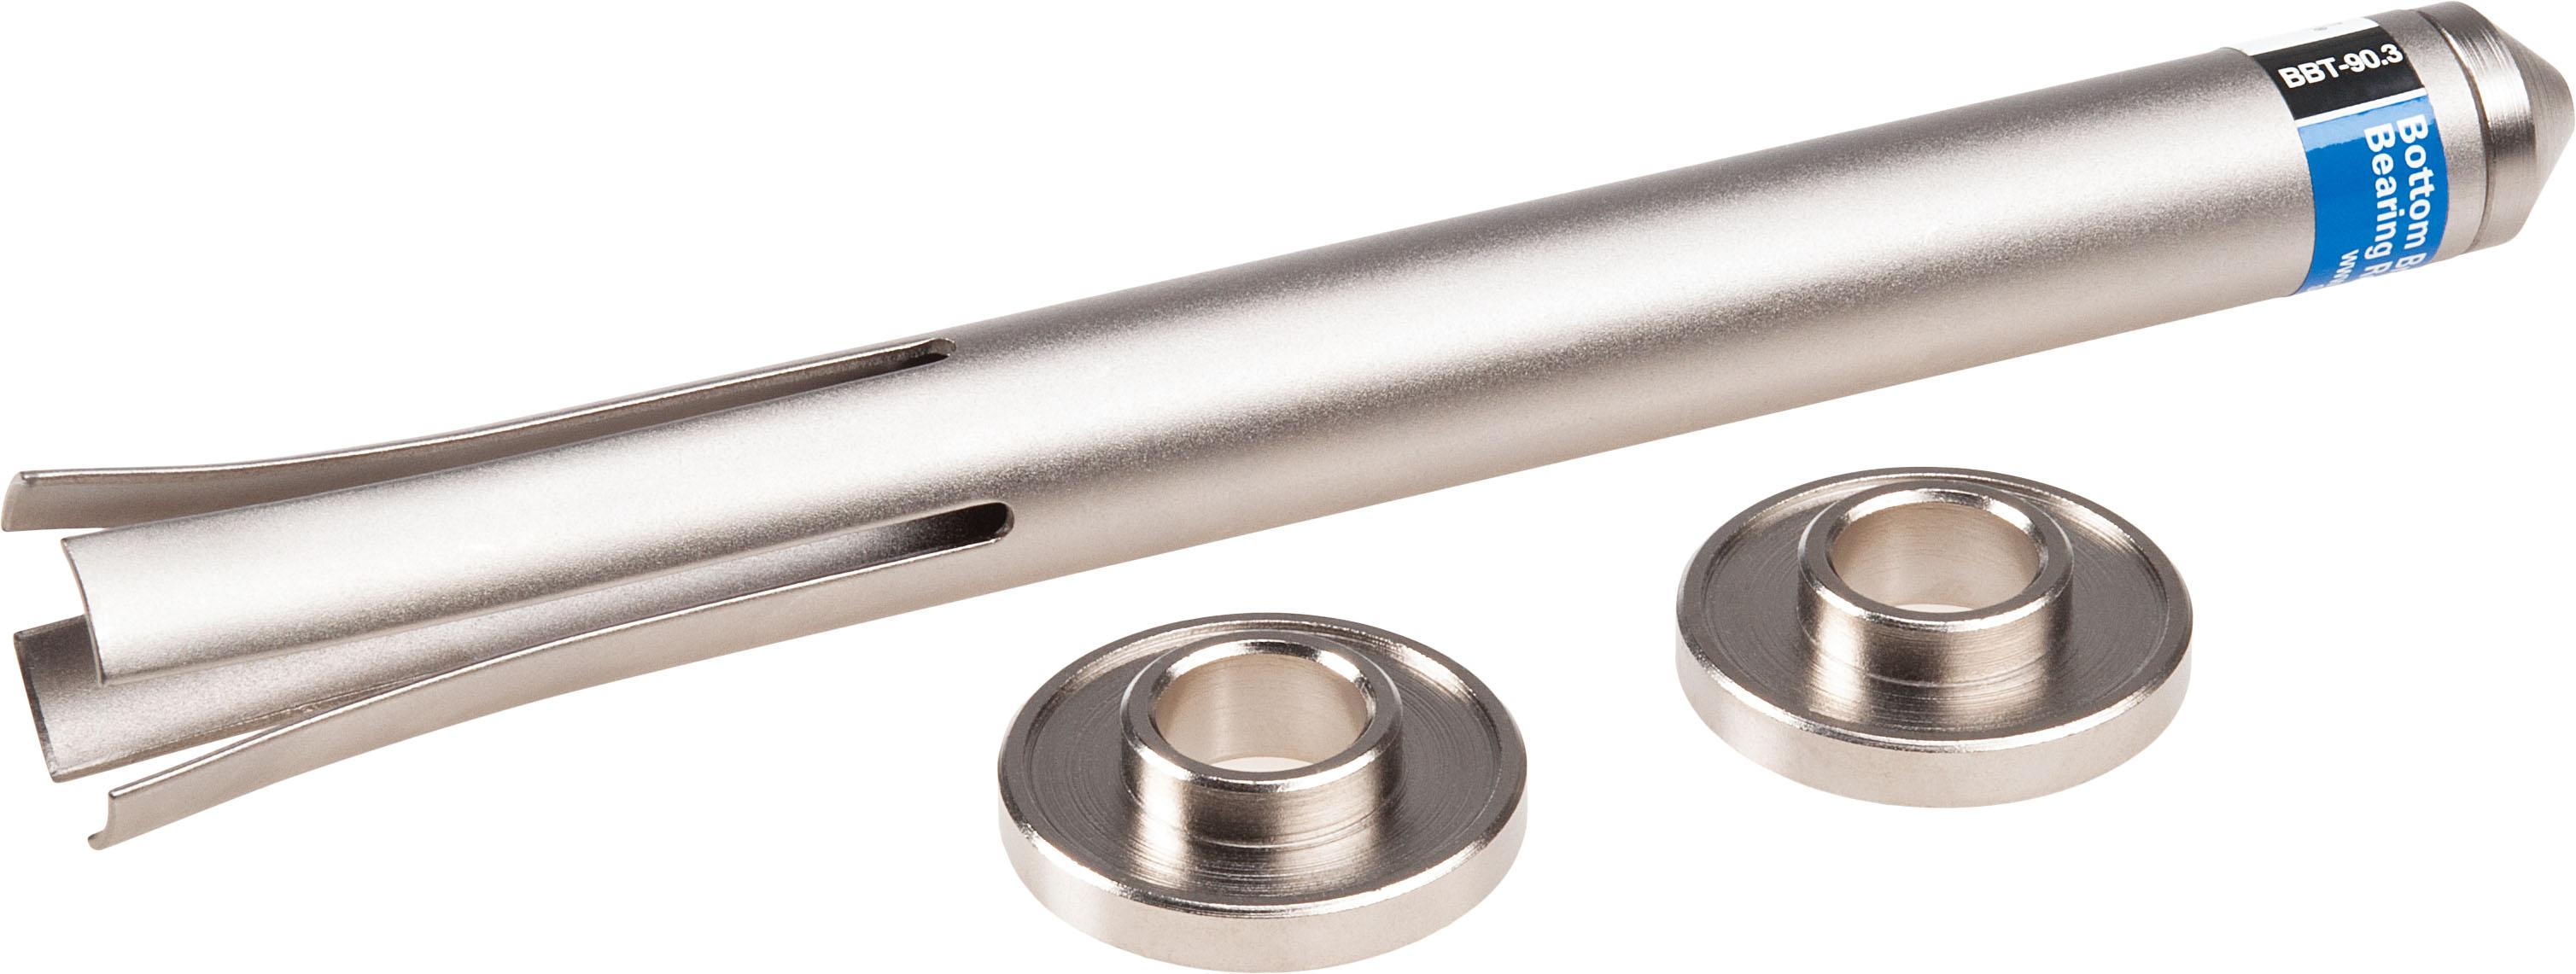 Park Tool Press Fit Bb Bearing Tool Set Bbt-90.3 - Silver